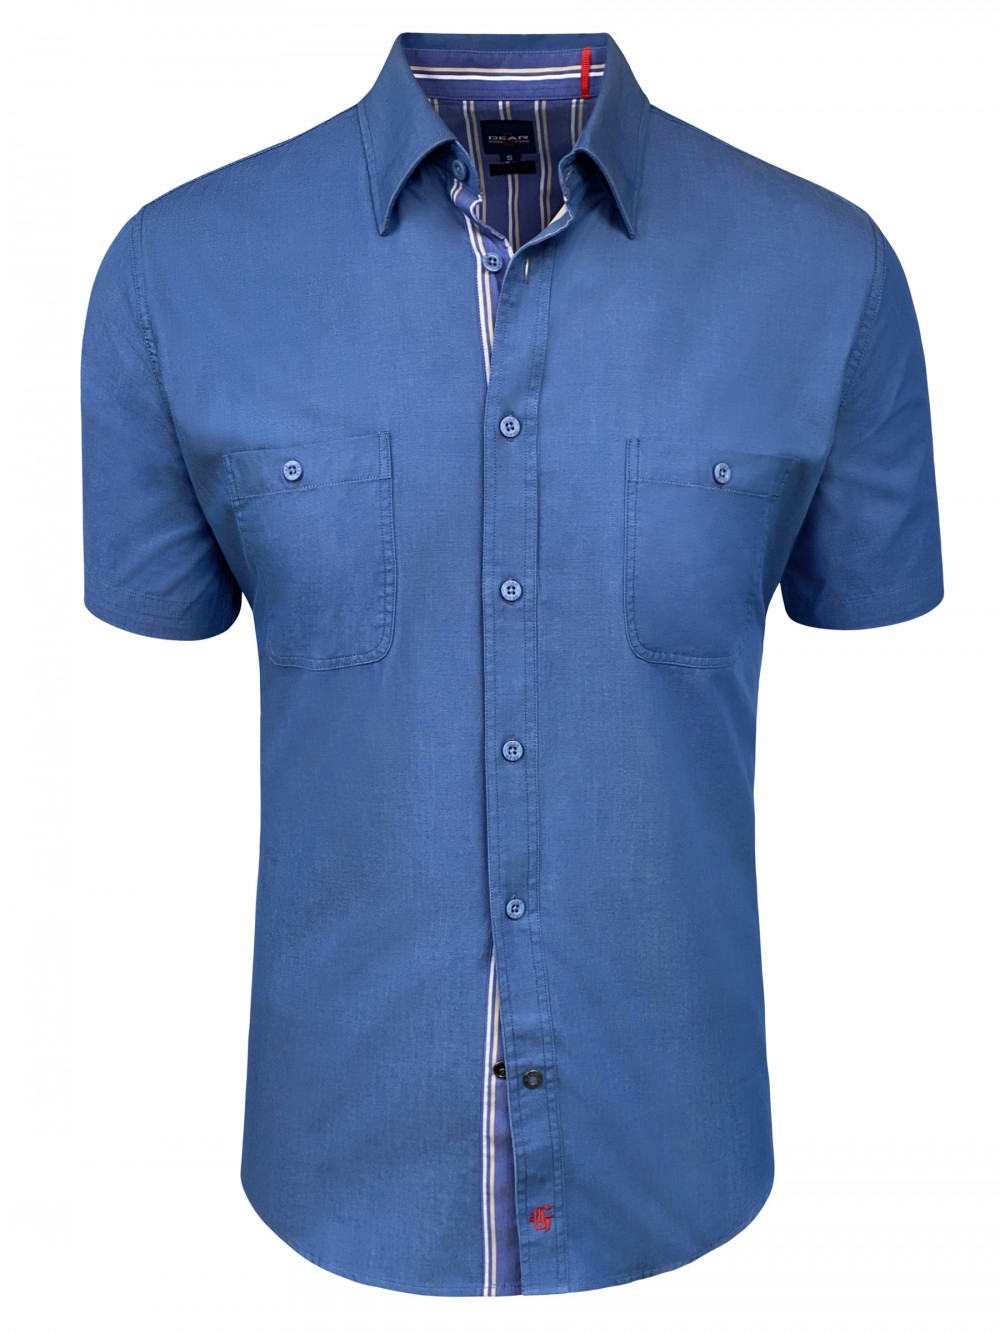 GIUSEPPE SHM1301Shirt Cotton Slim fit blue